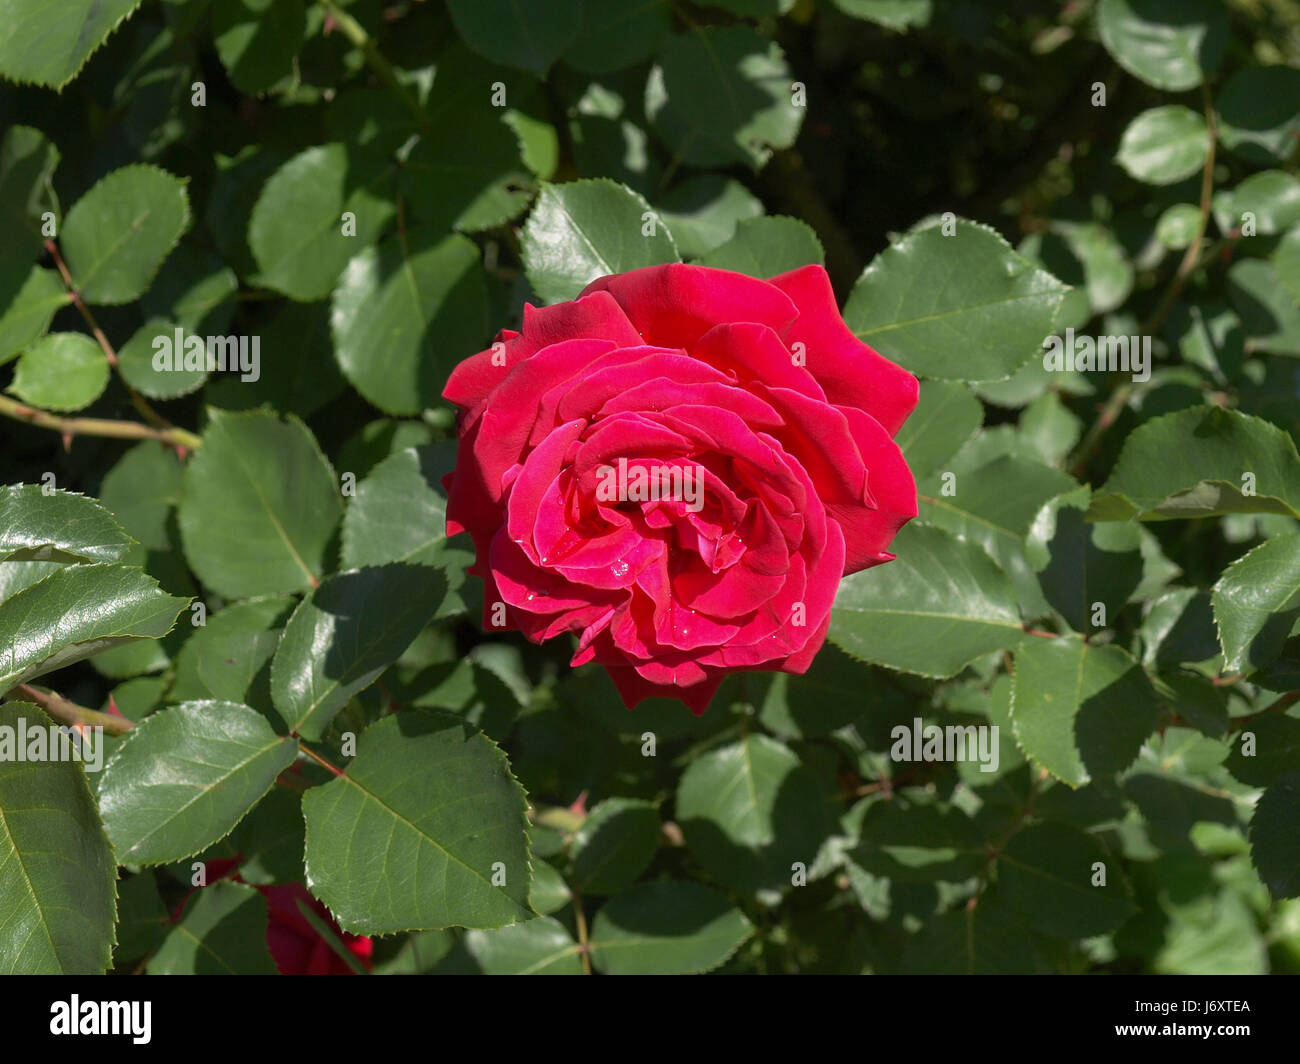 Blume rot Rosenblatt Baum Blume Pflanze rose verlässt lila Busch Strauch  Stockfotografie - Alamy